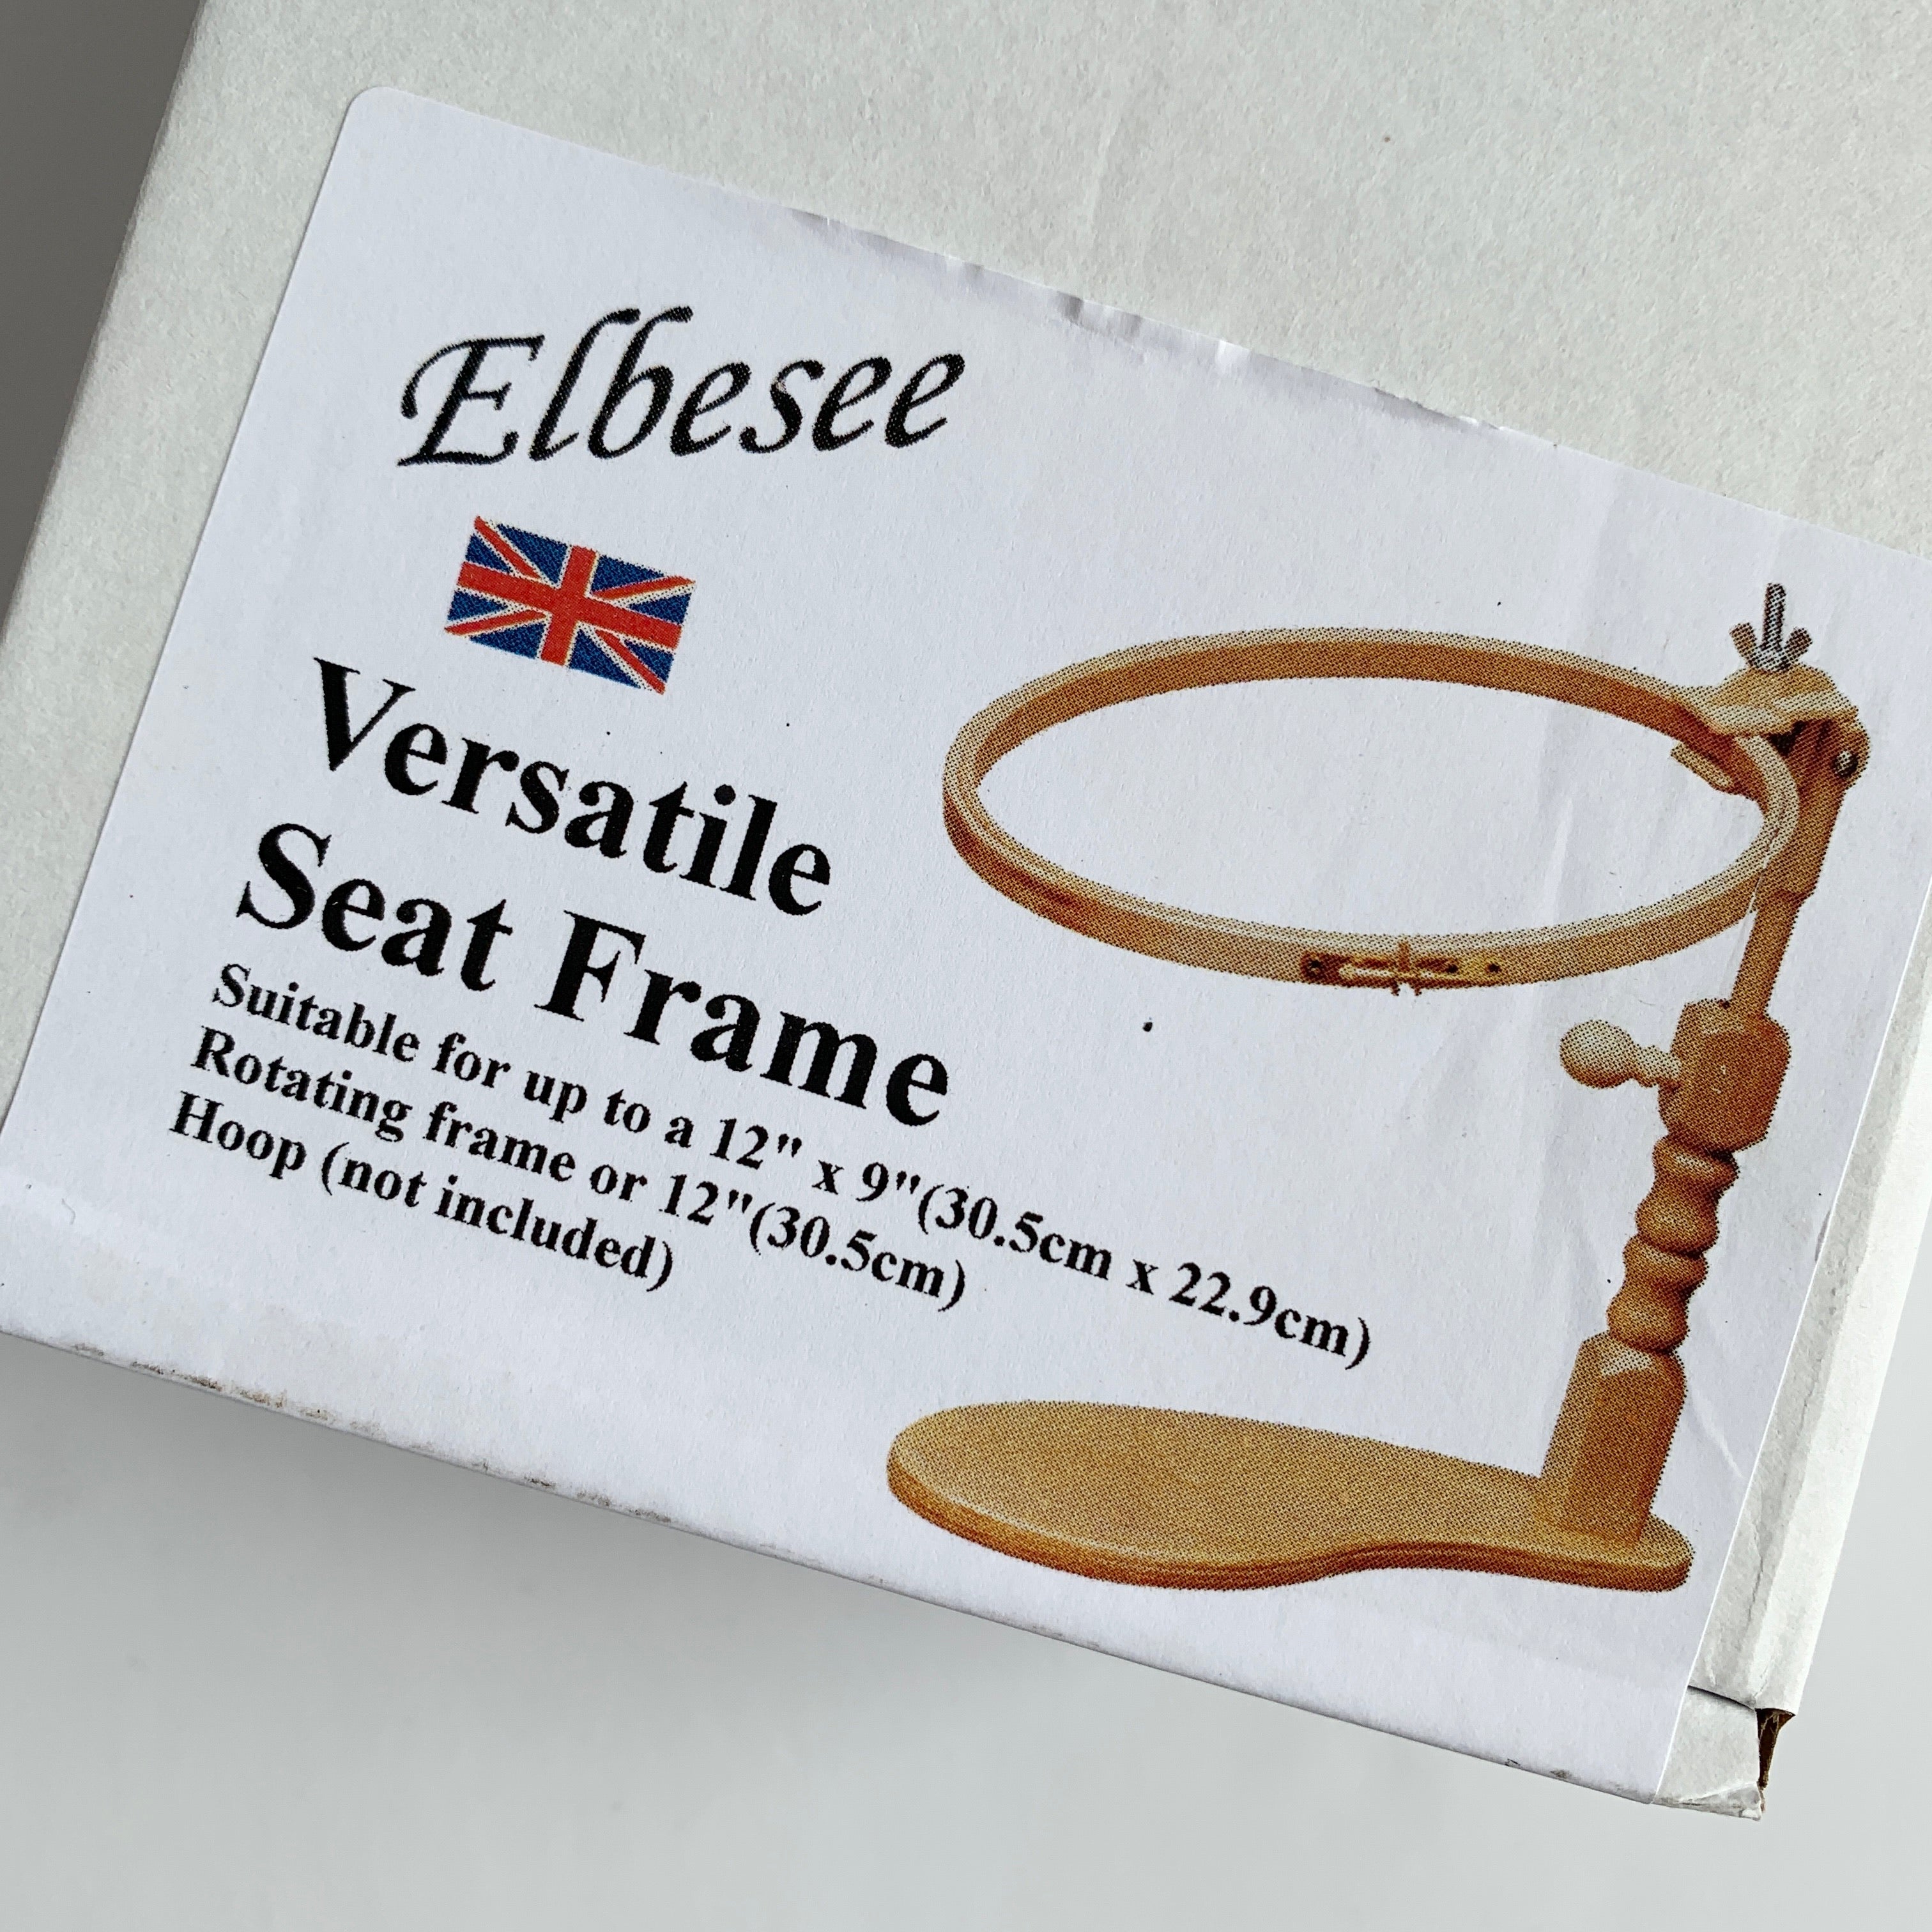 Elbesee Versatile seat frame